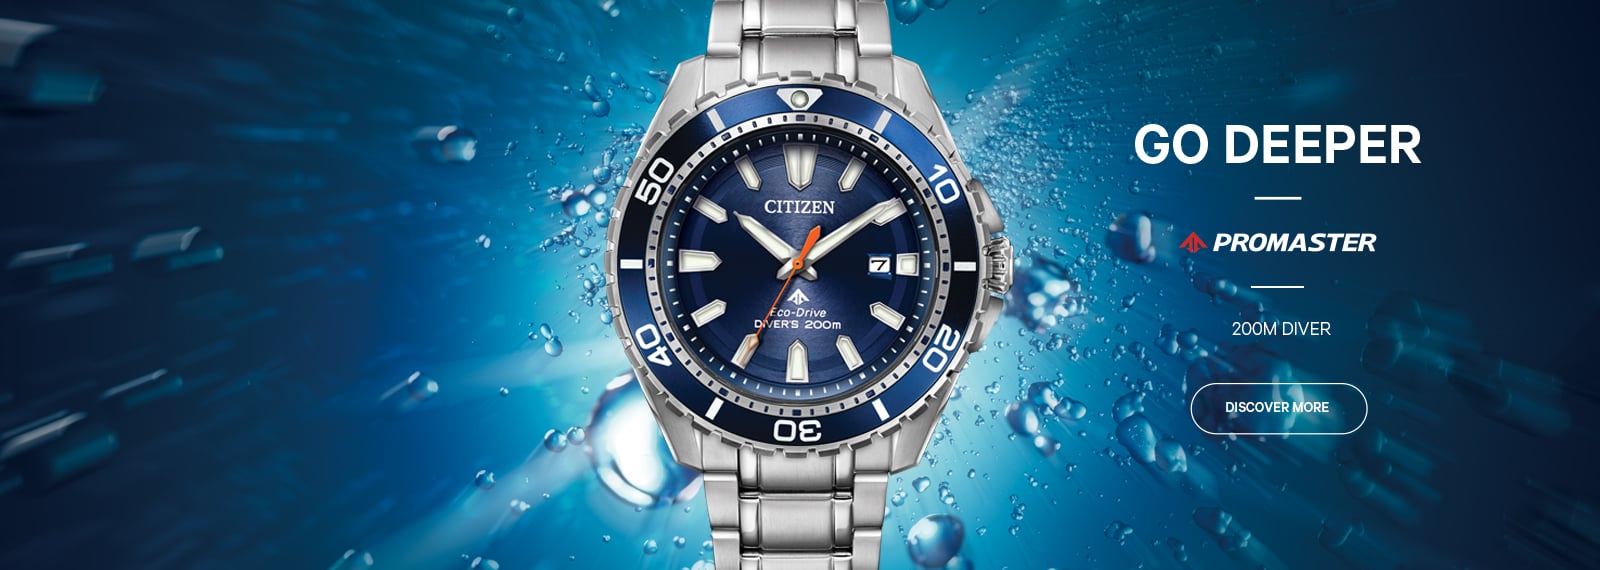 Citizen Promaster Diver watch